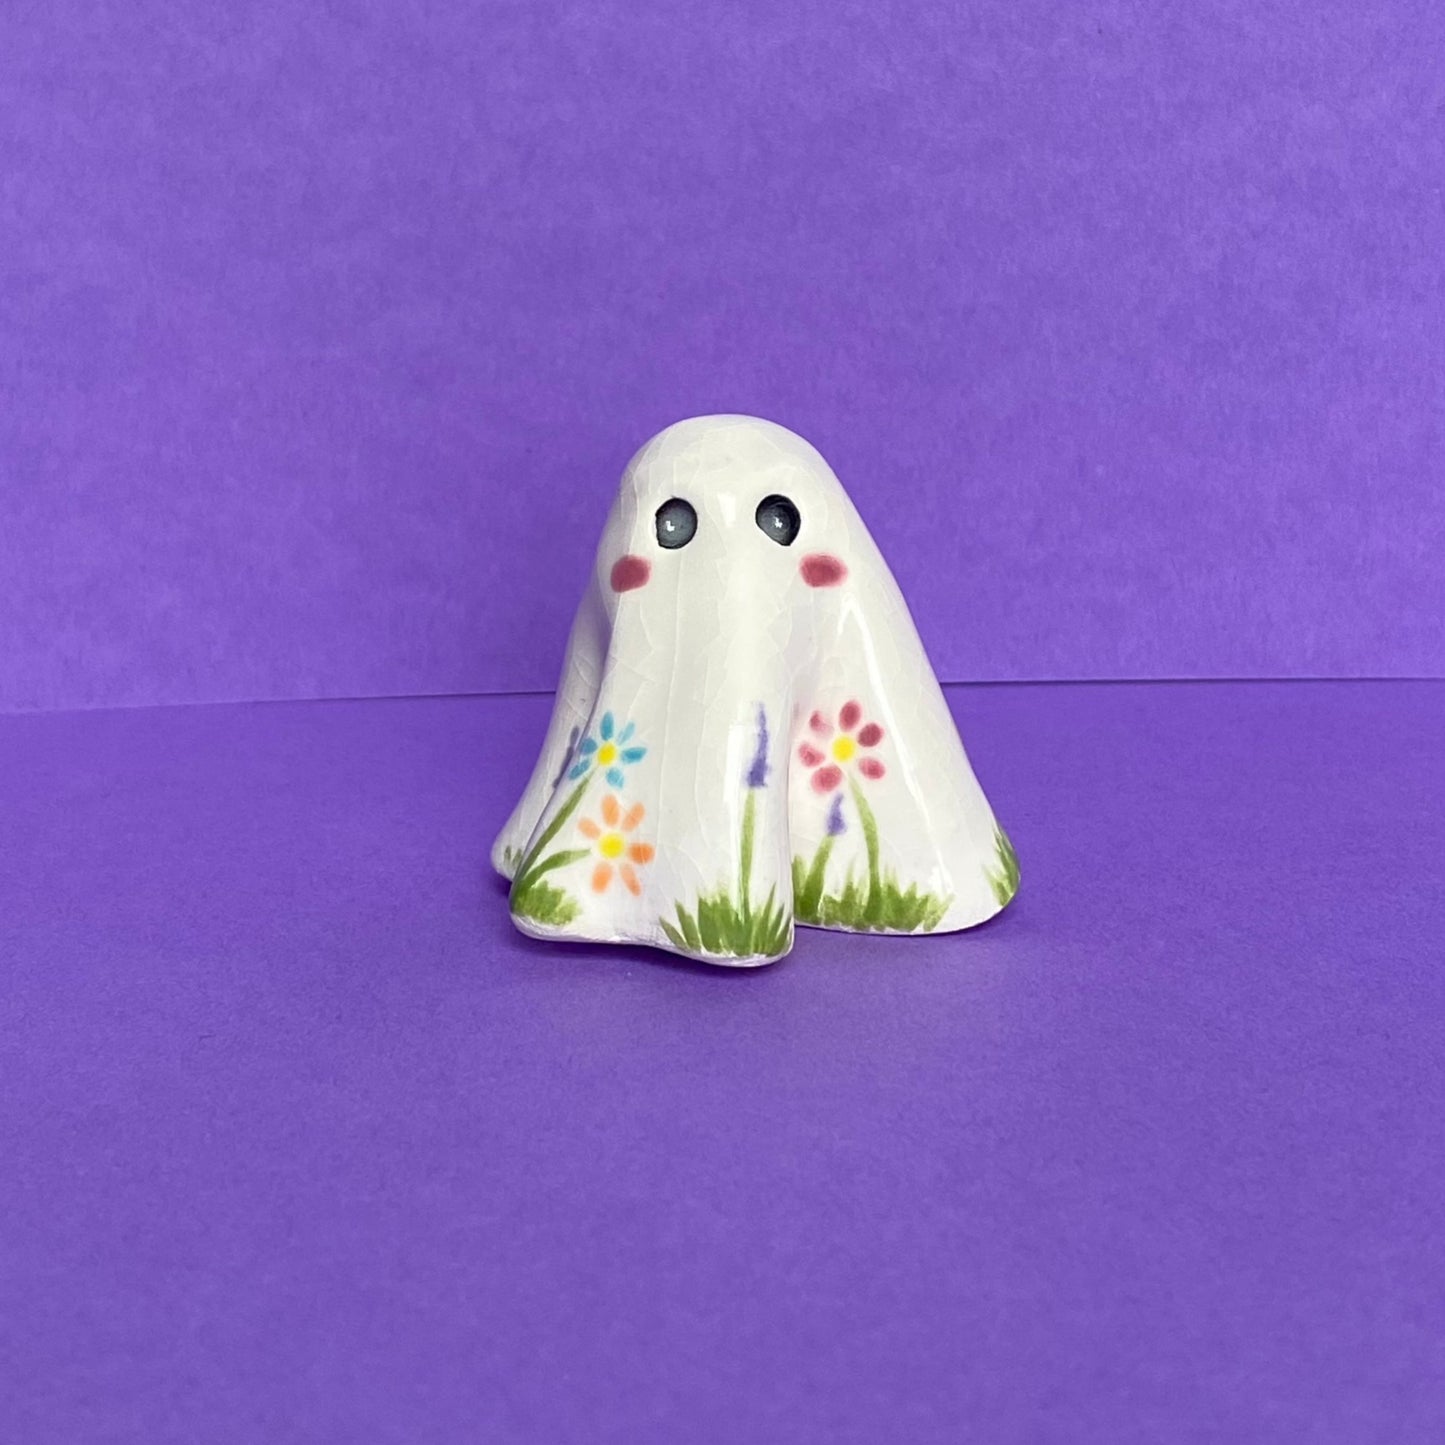 Talila - Handmade Floral Ghost Figurine Politely Declining